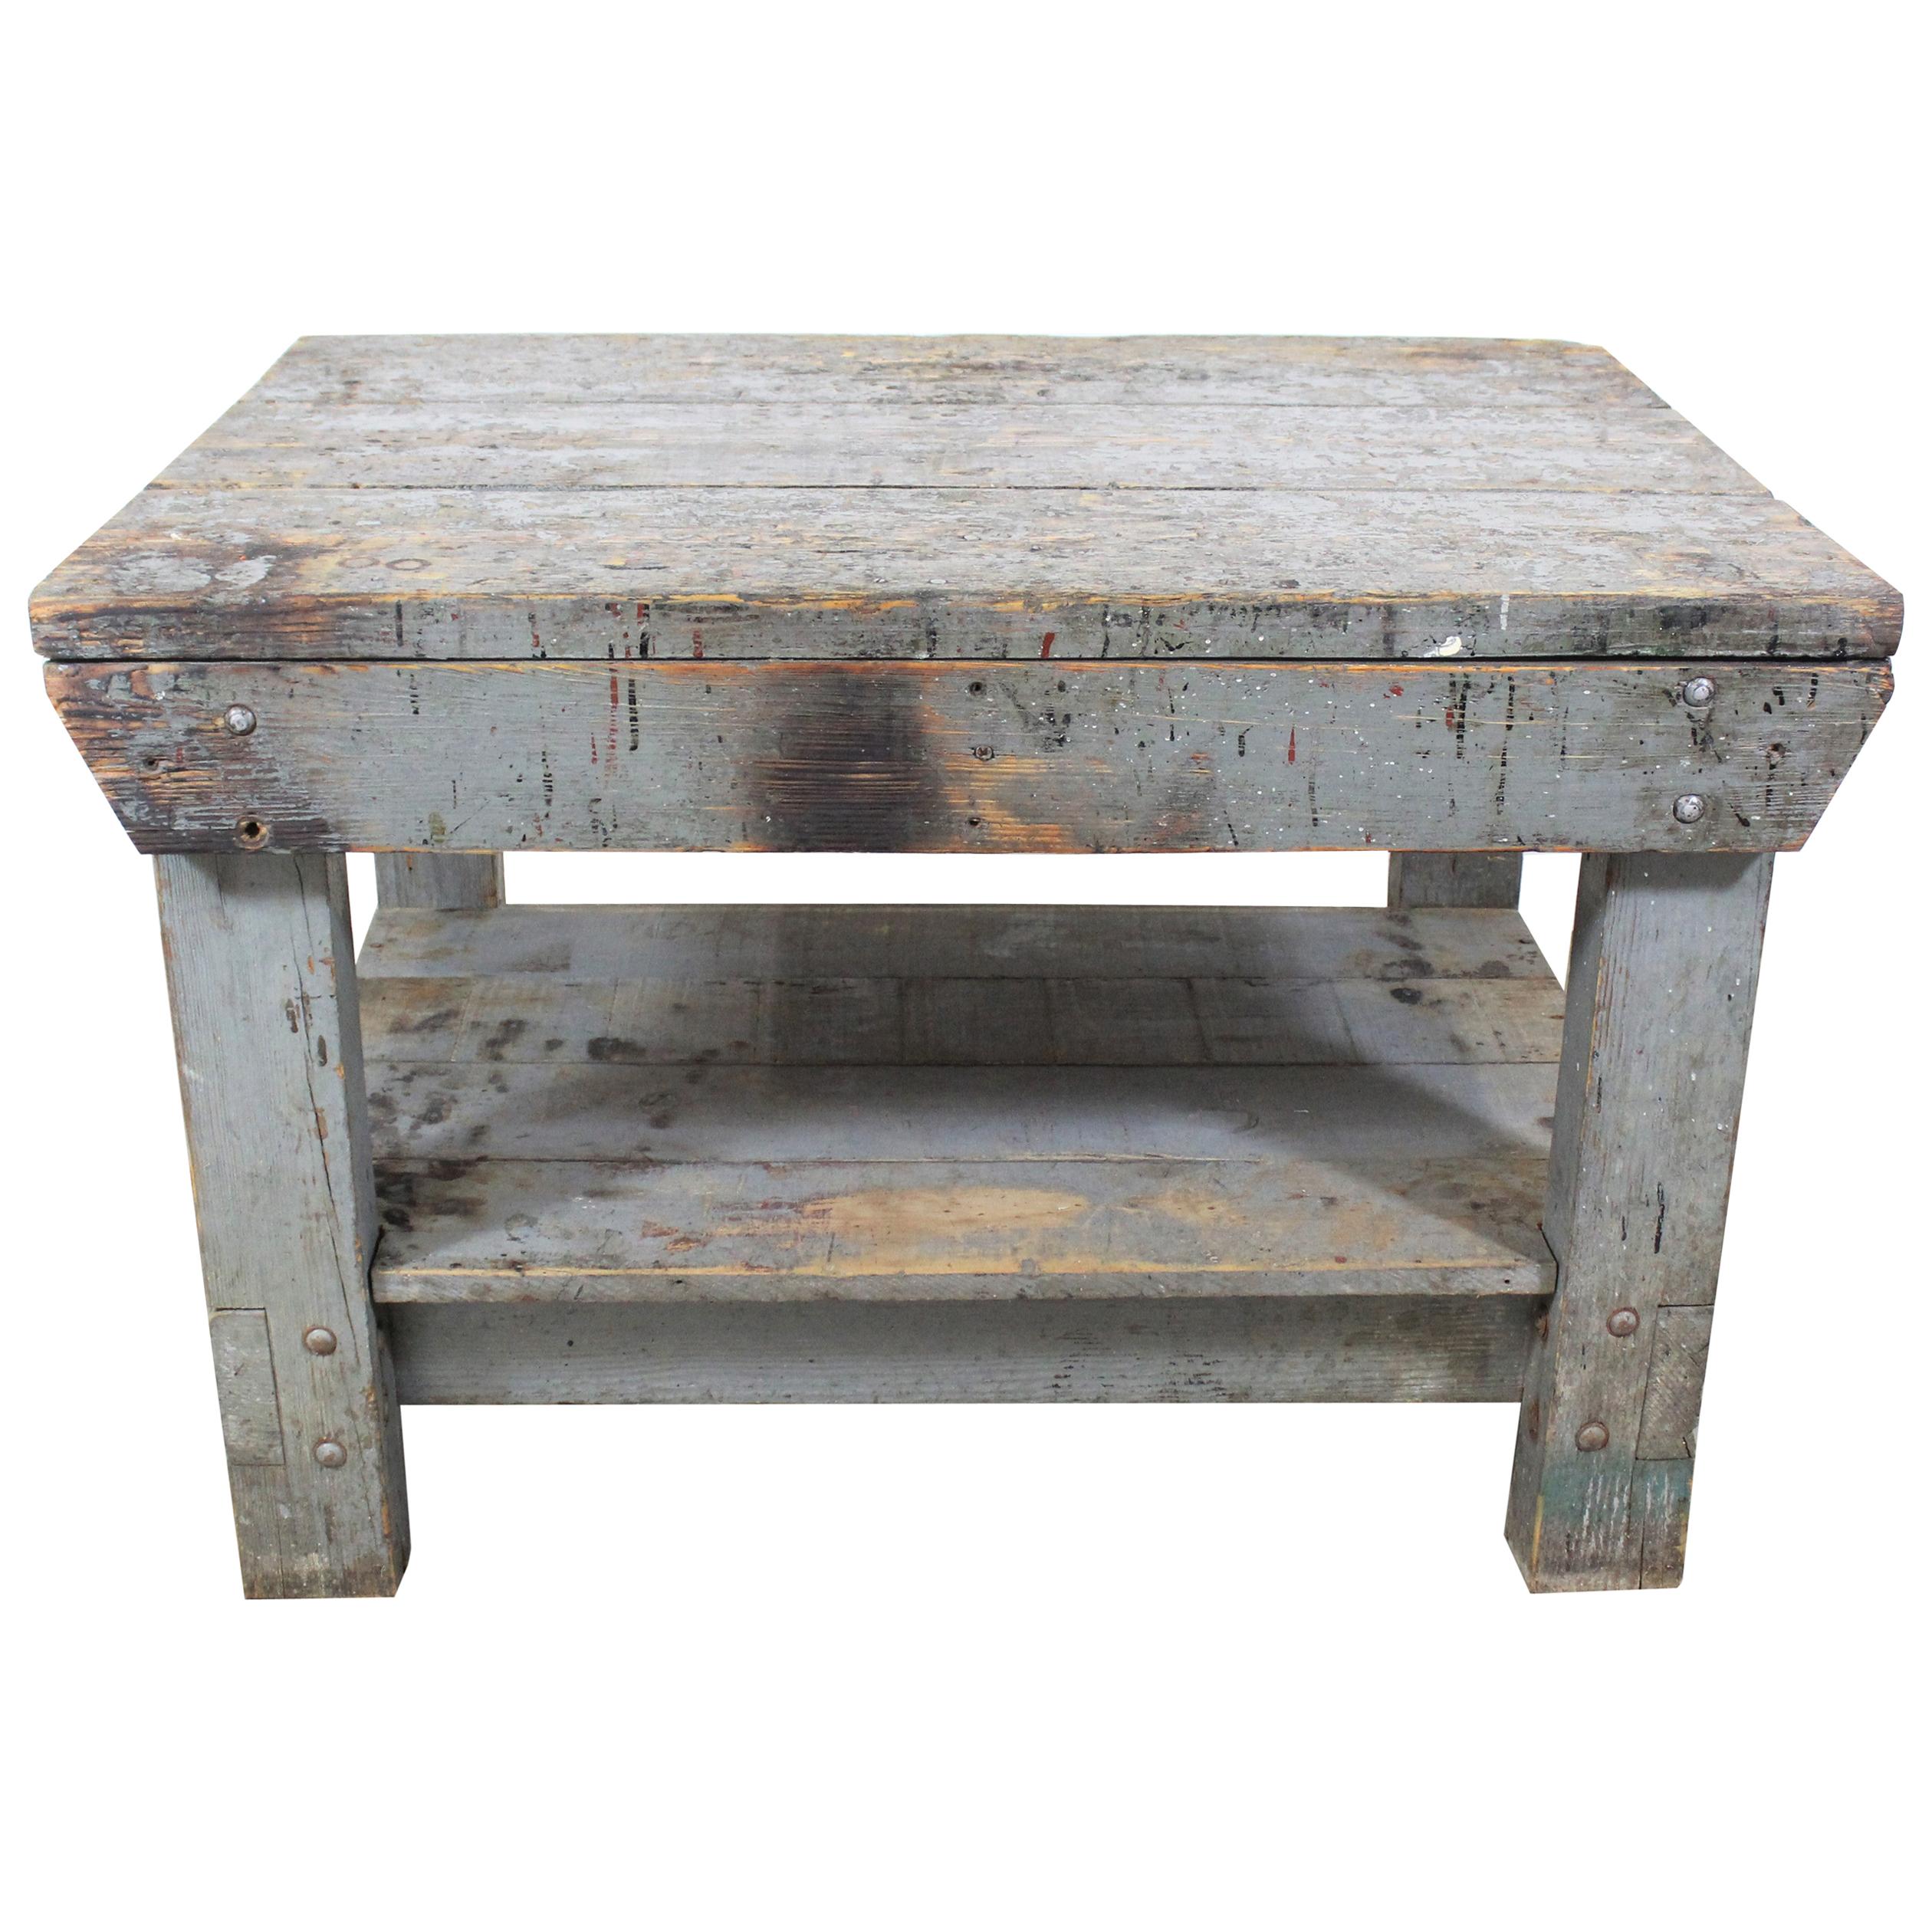 Vintage/Antique Industrial Primitive Workbench Table/Island, circa 1930s